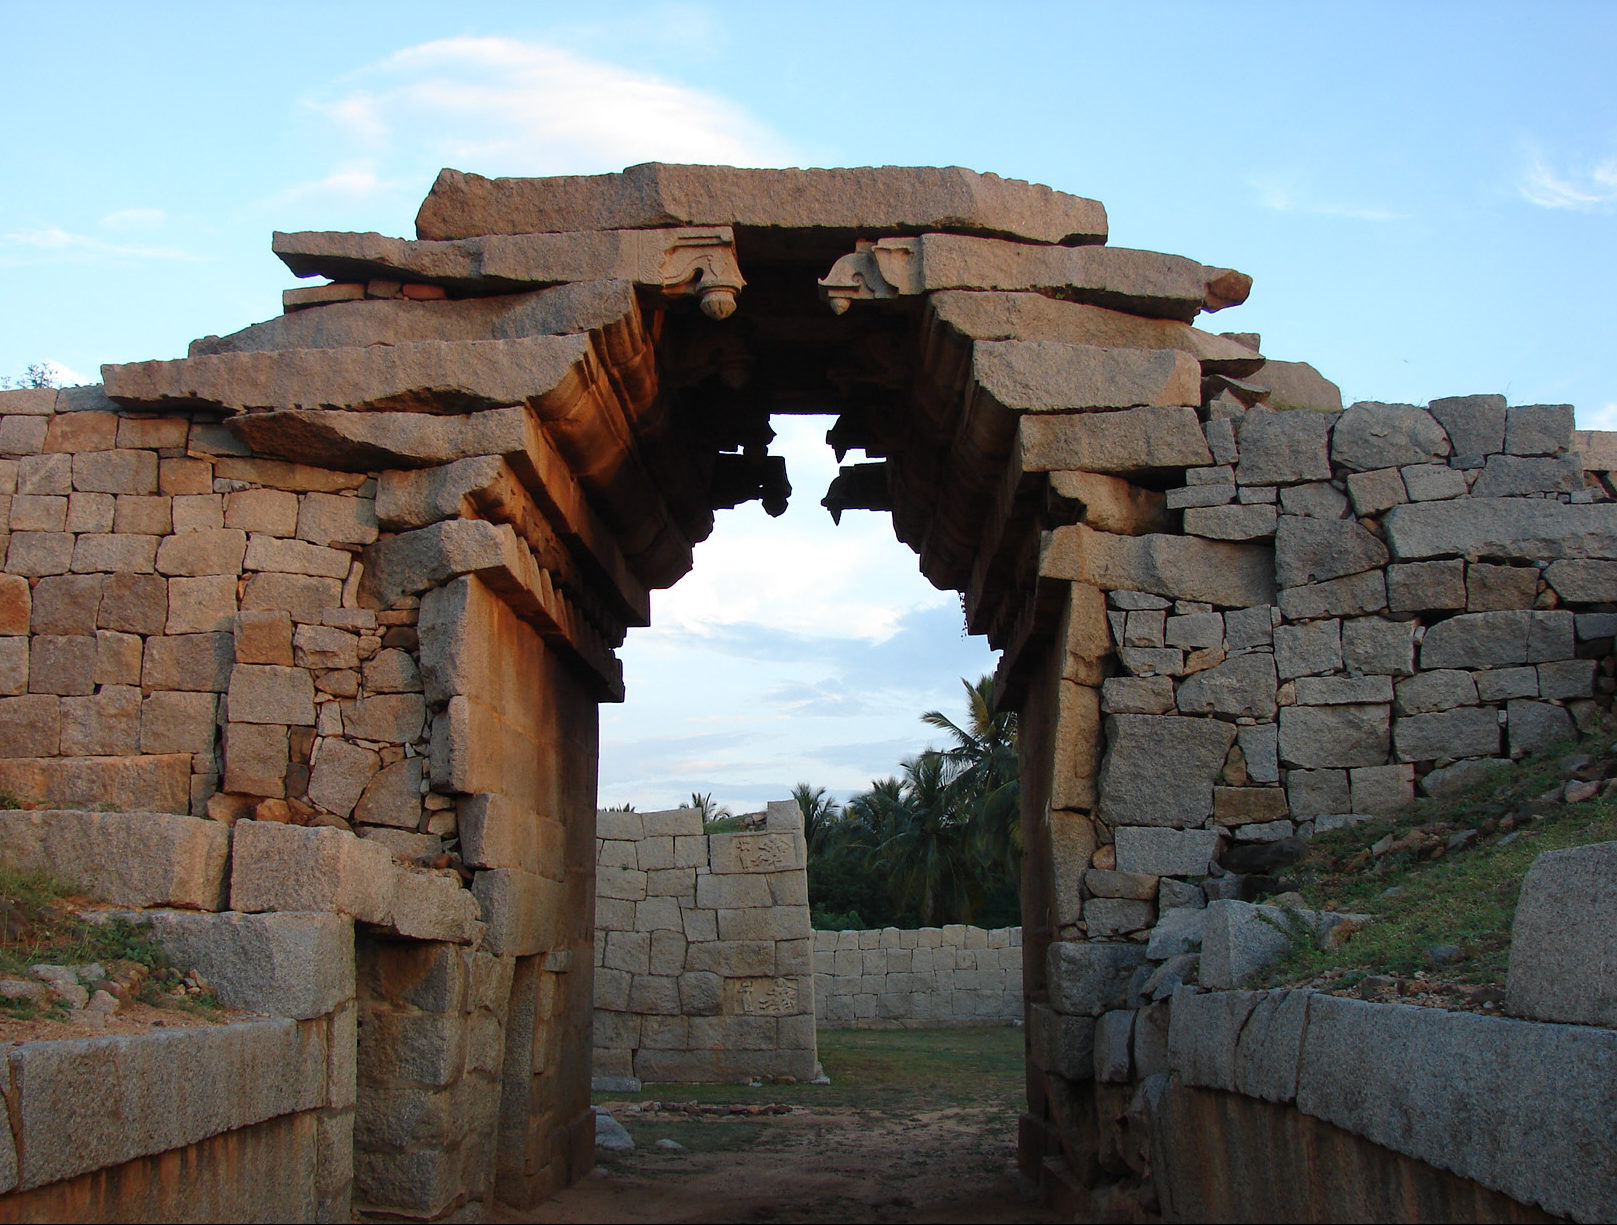 Bhima's gateway